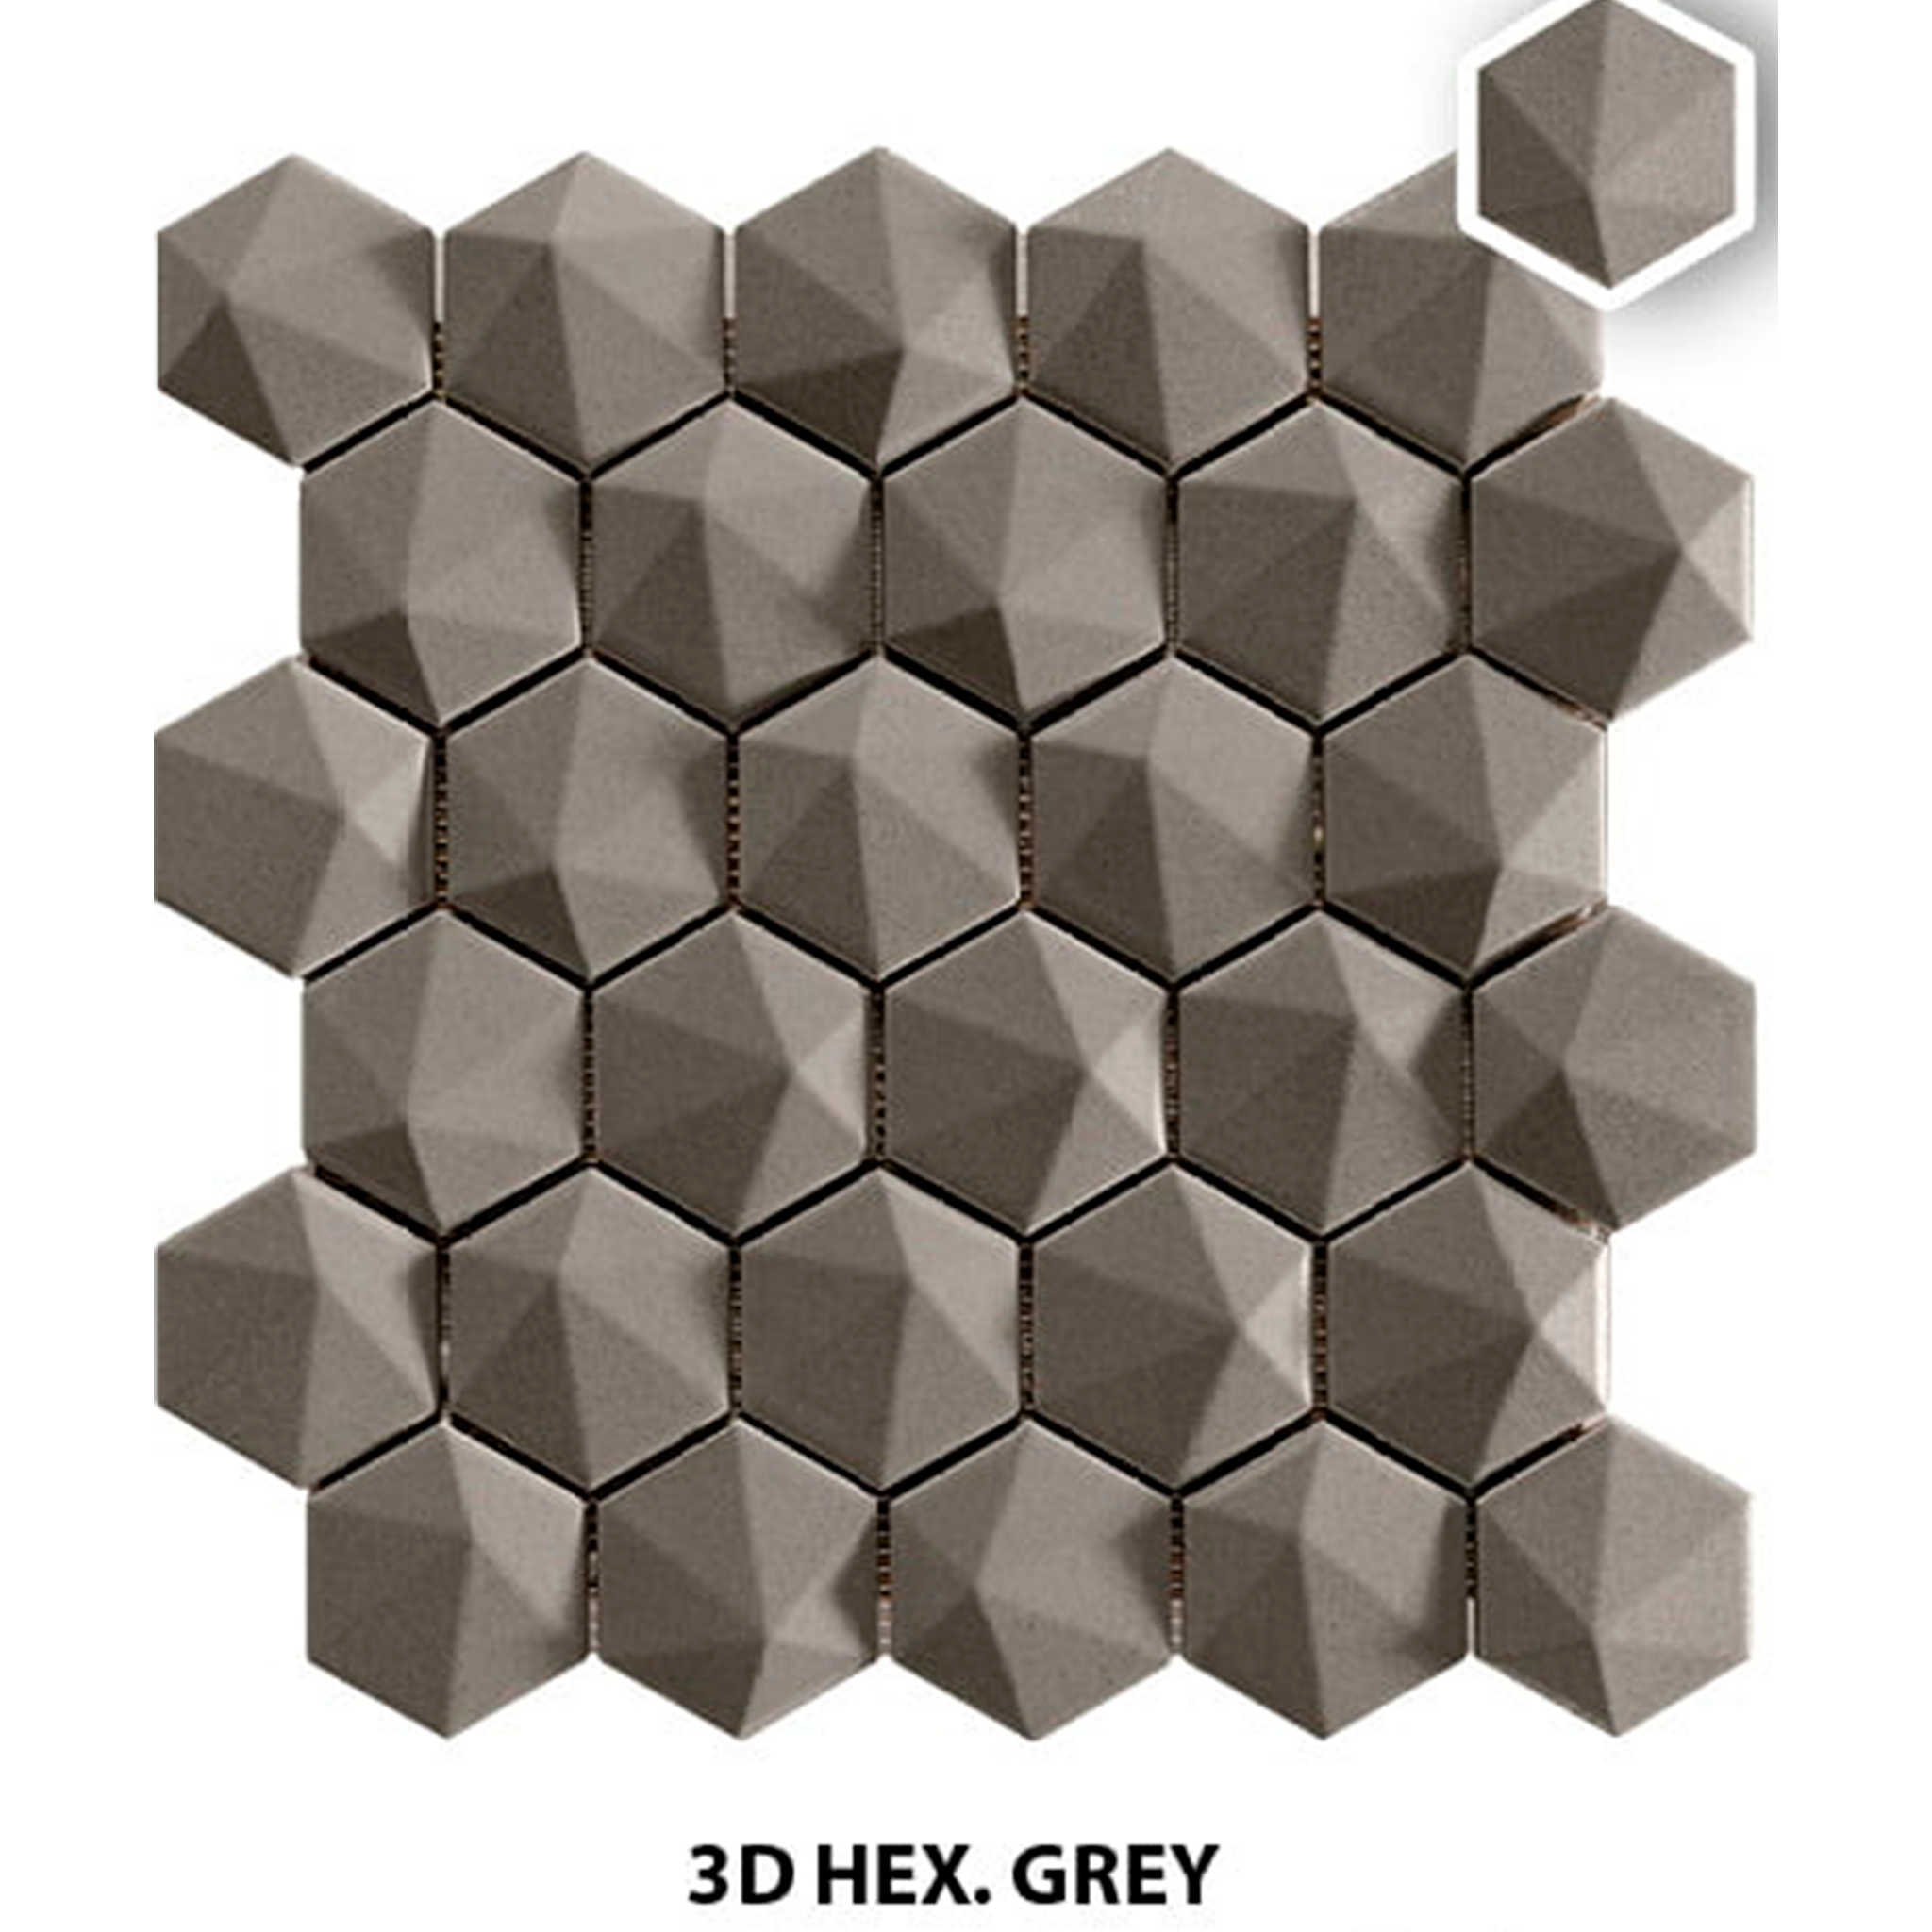 3Dhex Grey